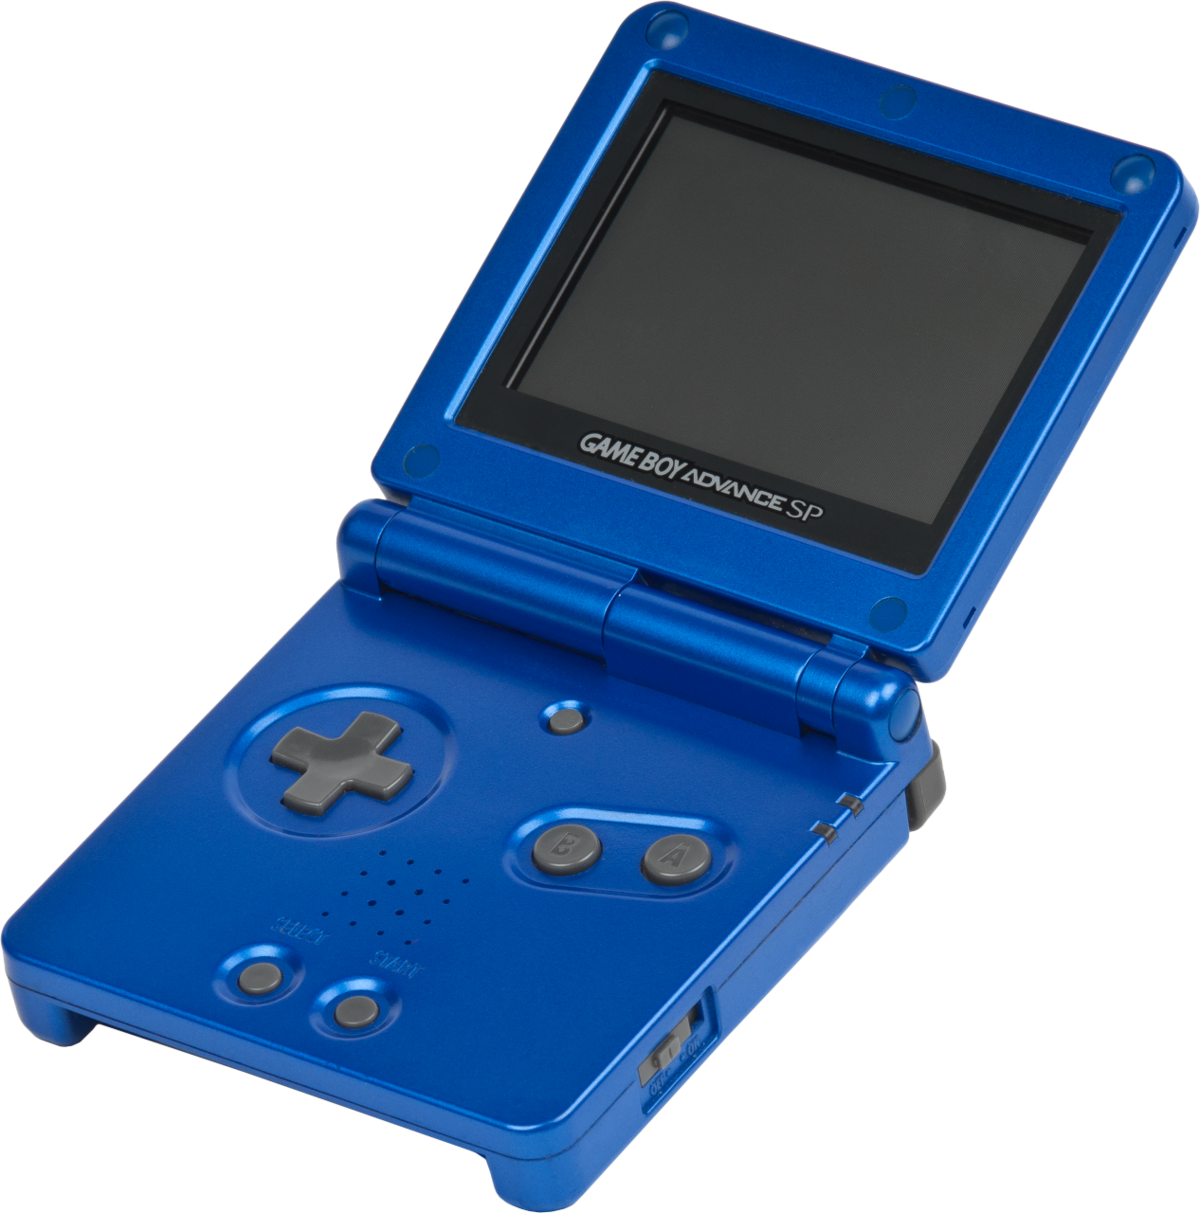 Game Boy Advance SP - Bulbapedia, the community-driven Pokémon